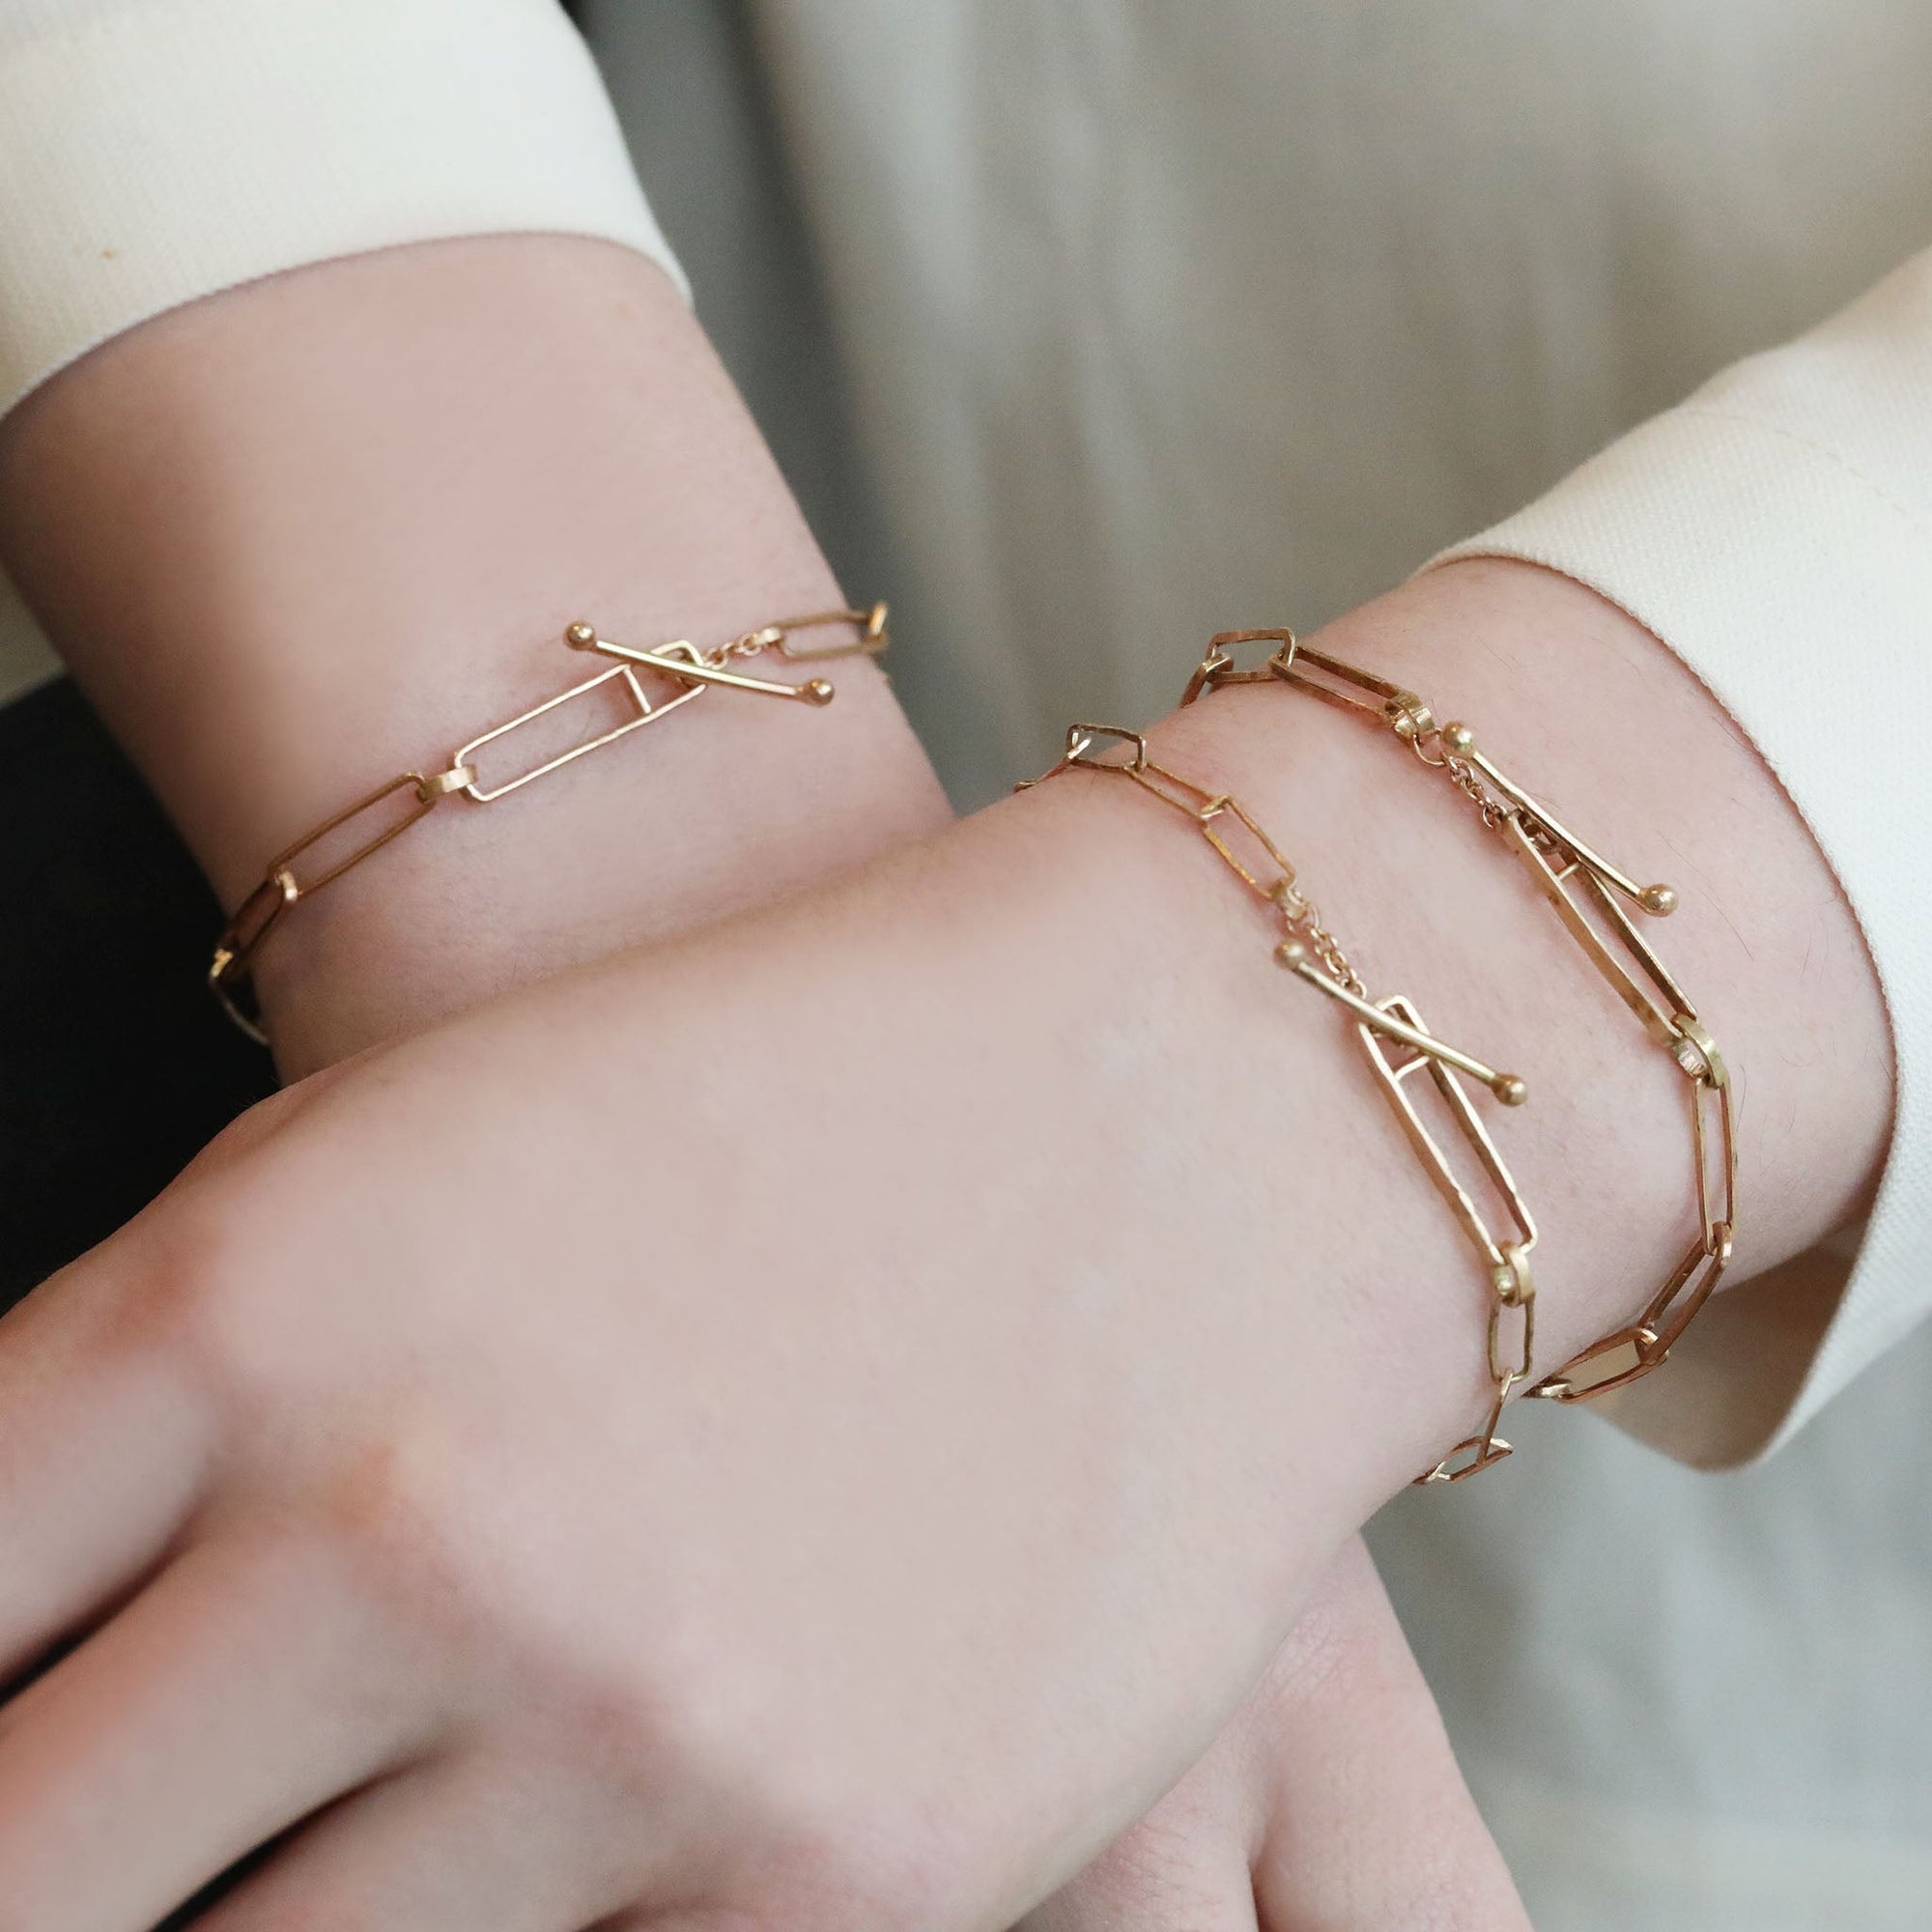 Gold &quot;Sweetie&quot; Bracelet Featuring Delicate Handmade Chain Links - Peridot Fine Jewelry - Sarah Macfadden